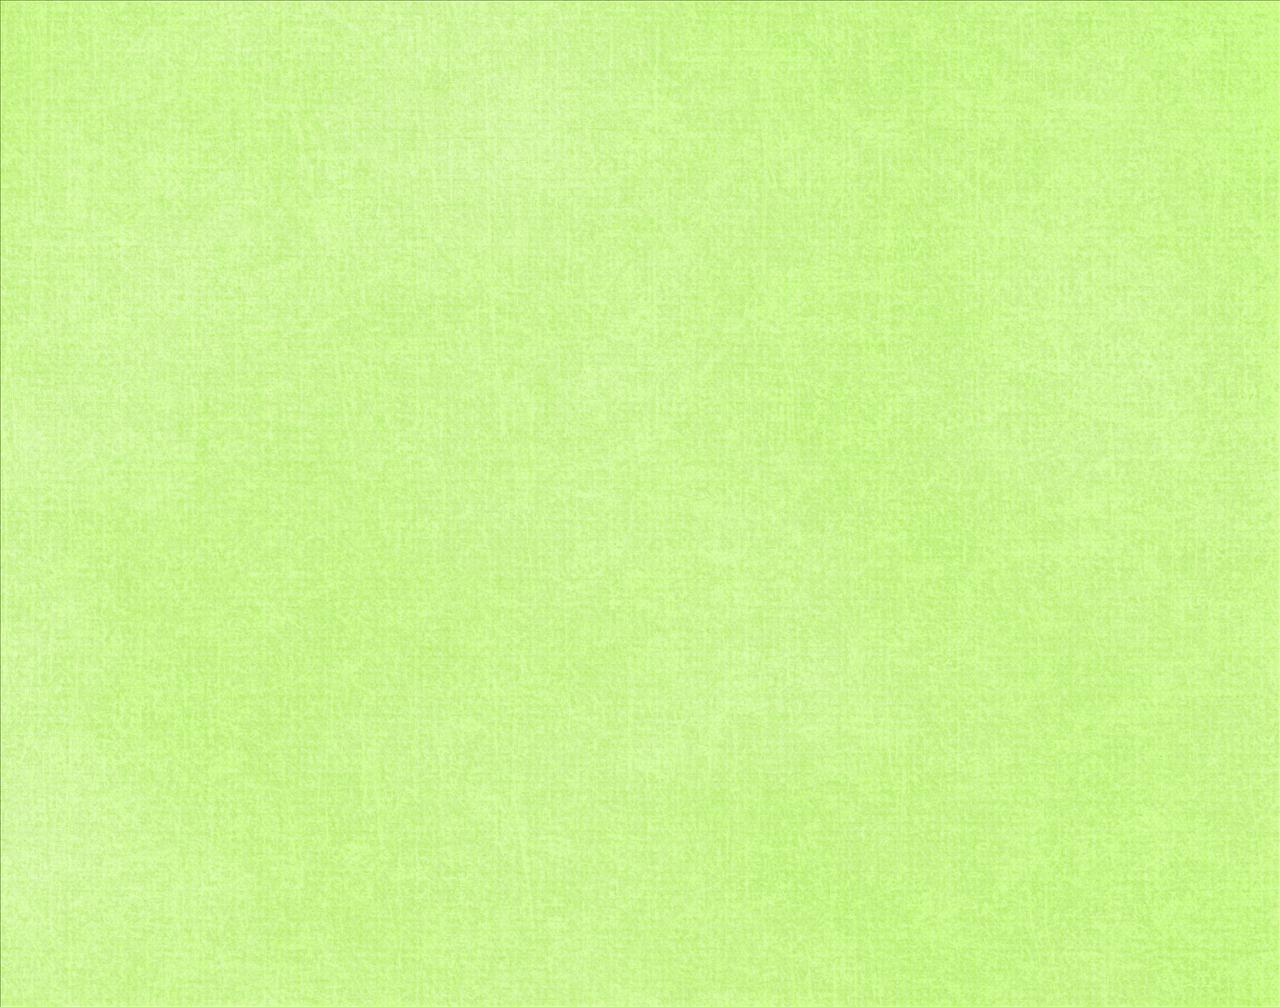 Plain Light Green Background. Latest Laptop Wallpaper